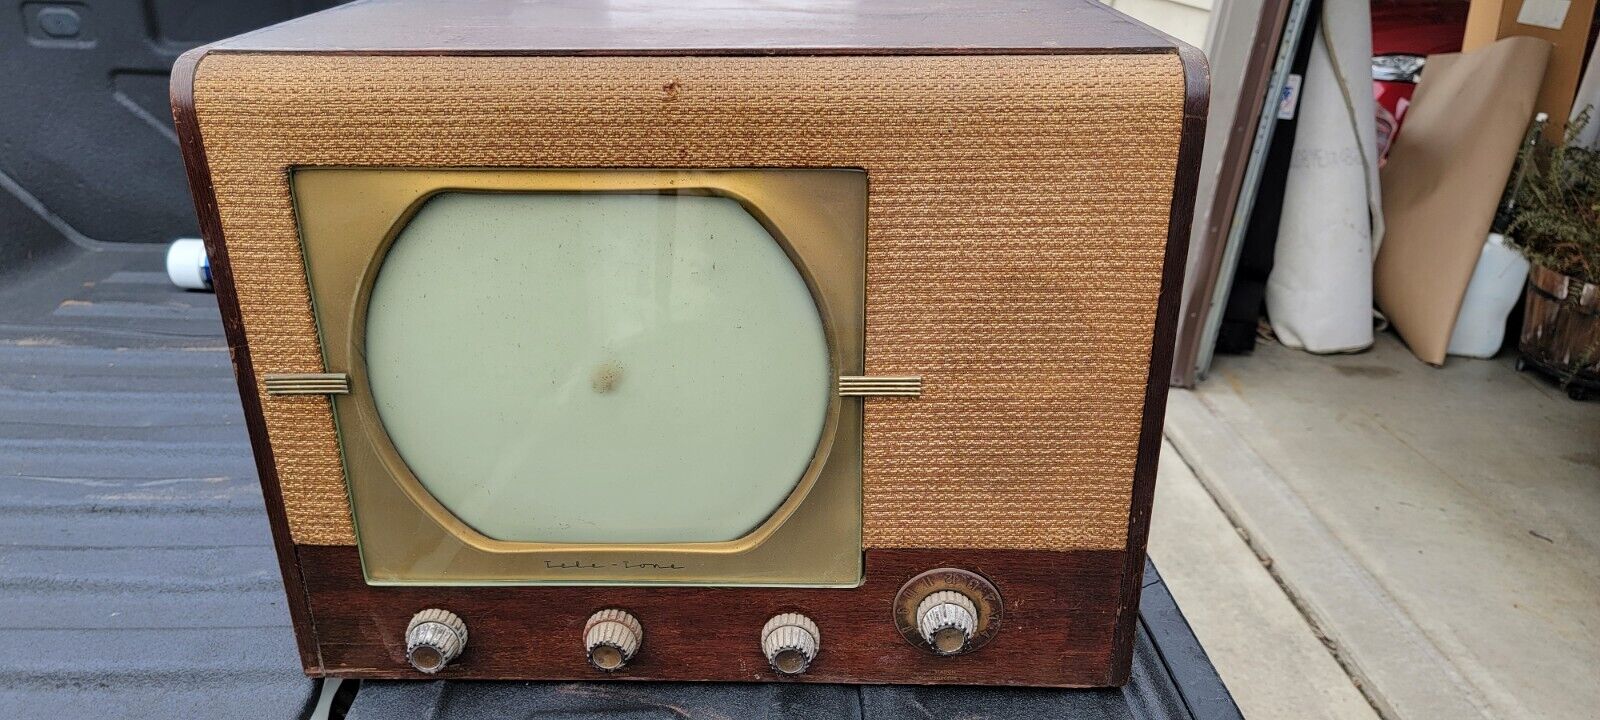 Vintage Tele-tone 1940s TV 